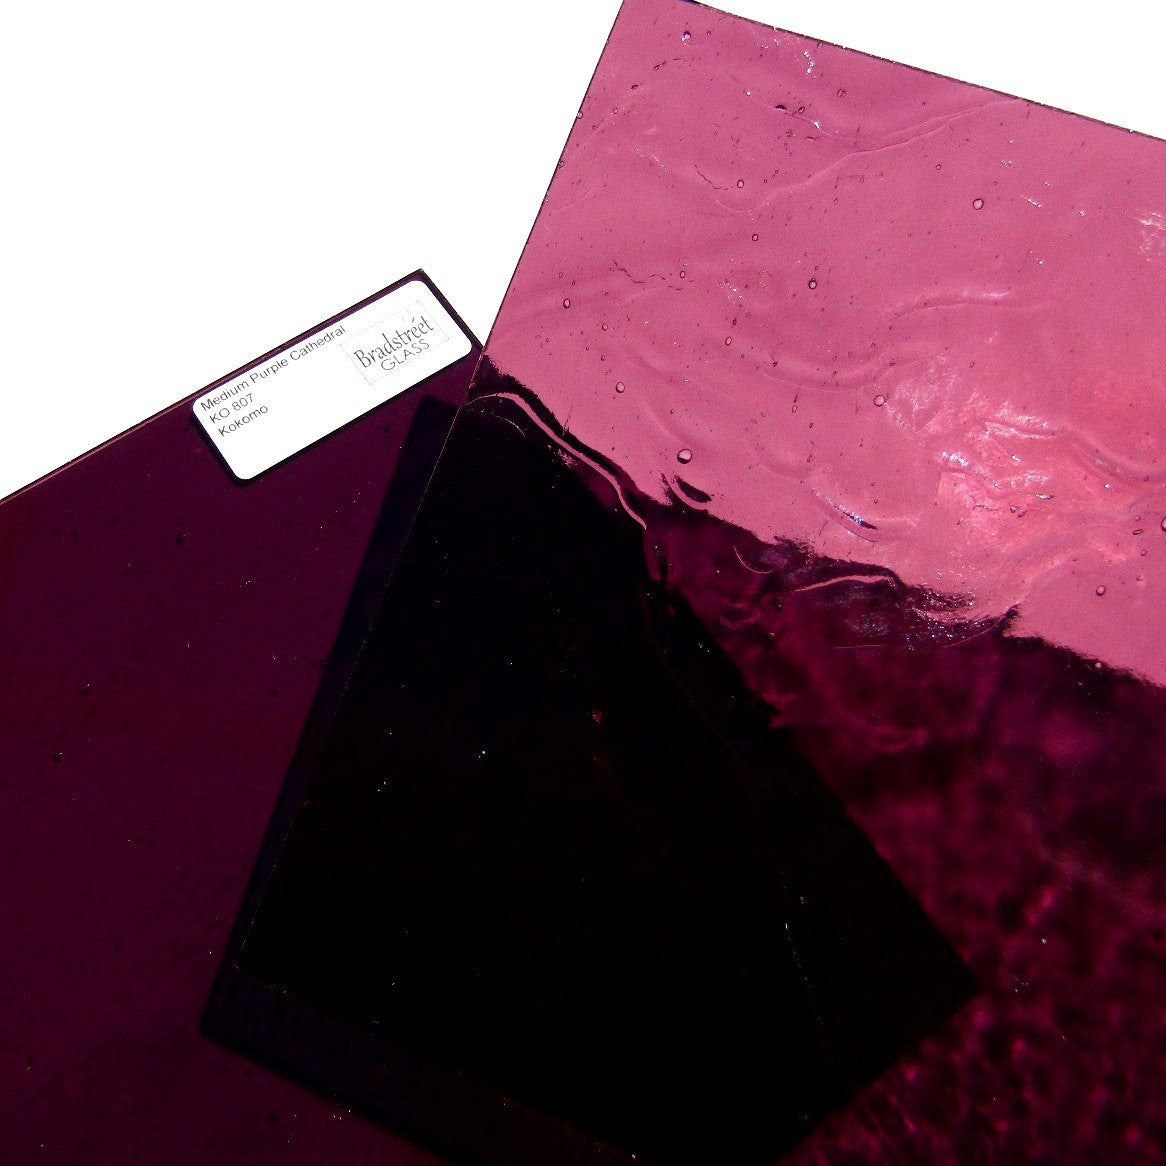 Medium Purple Stained Glass Sheet Cathedral Transparent Kokomo KO 807